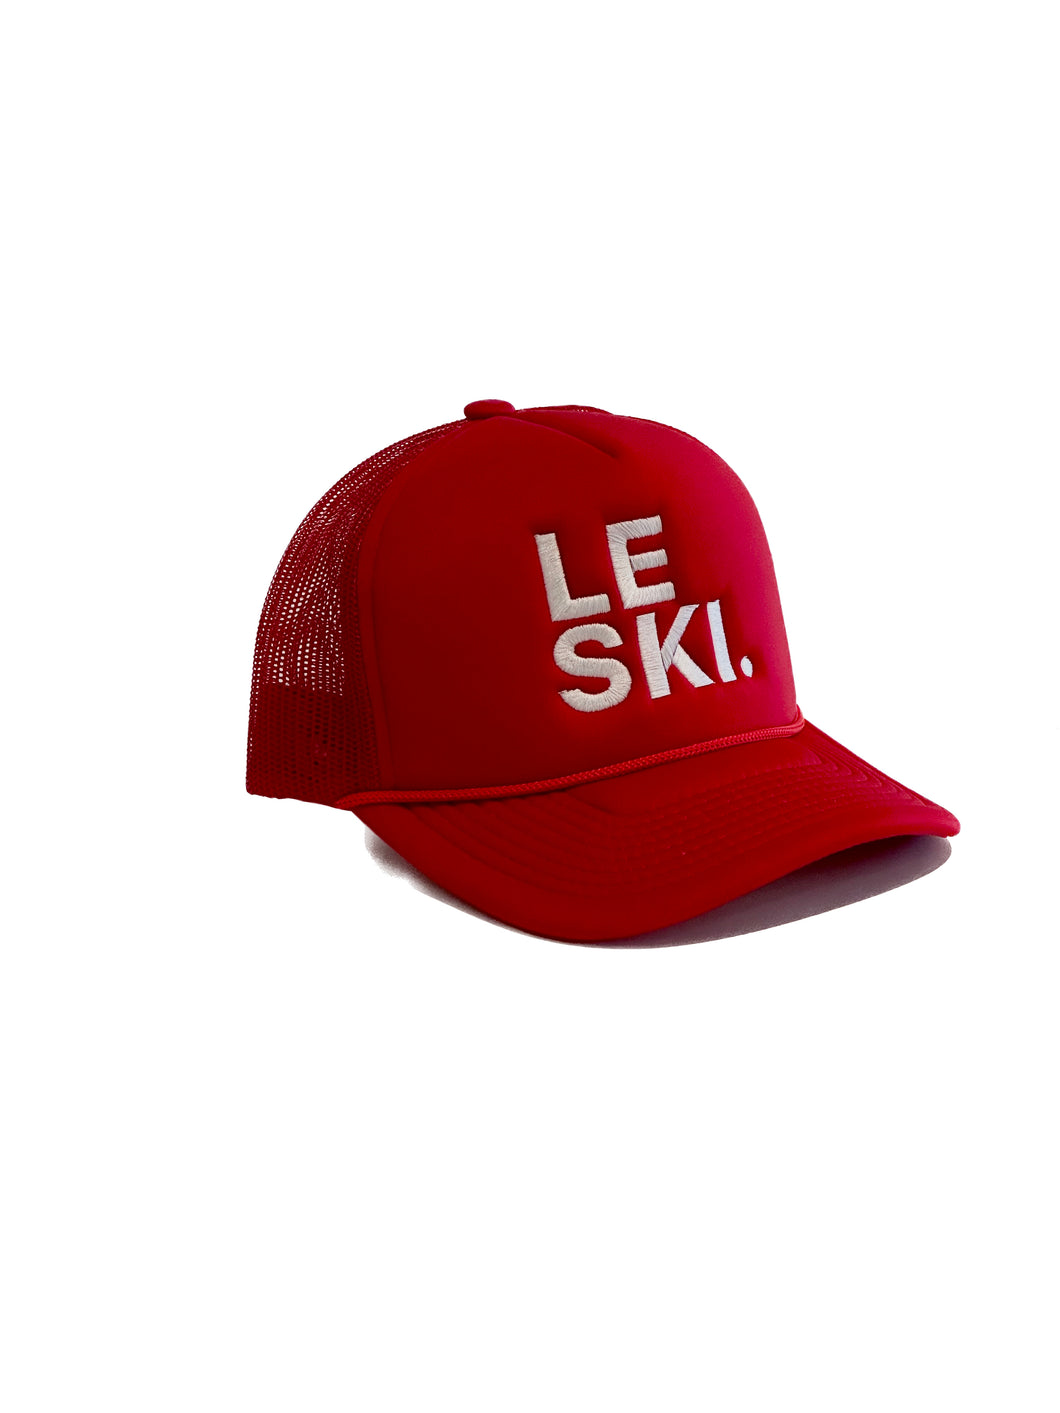 Le SKI. Hat RED-WHITE